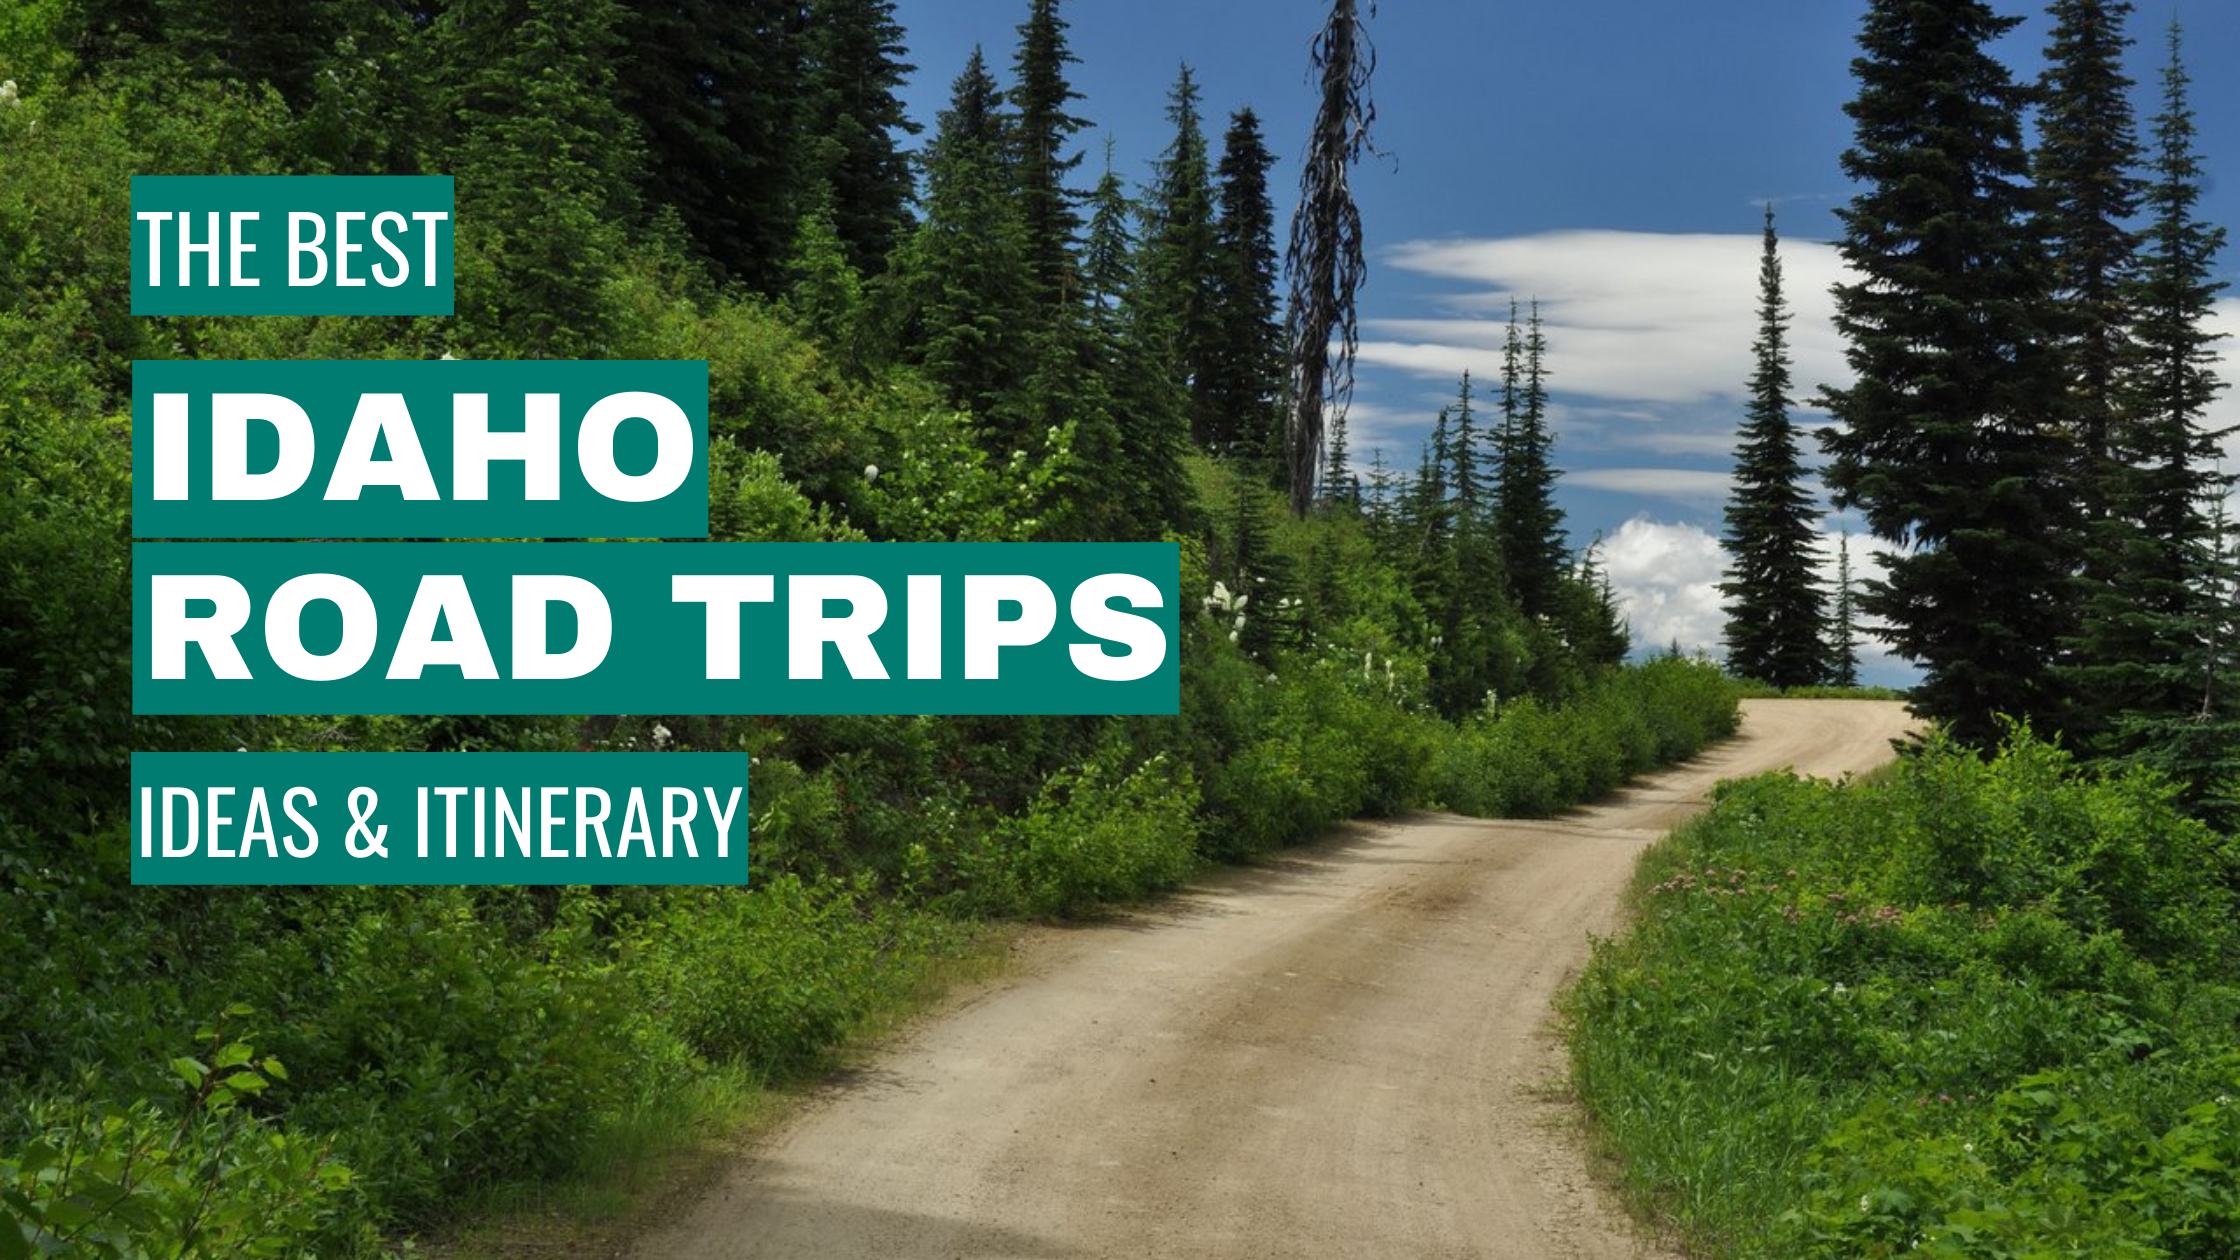 Idaho Road Trip Ideas: 11 Best Road Trips + Itinerary